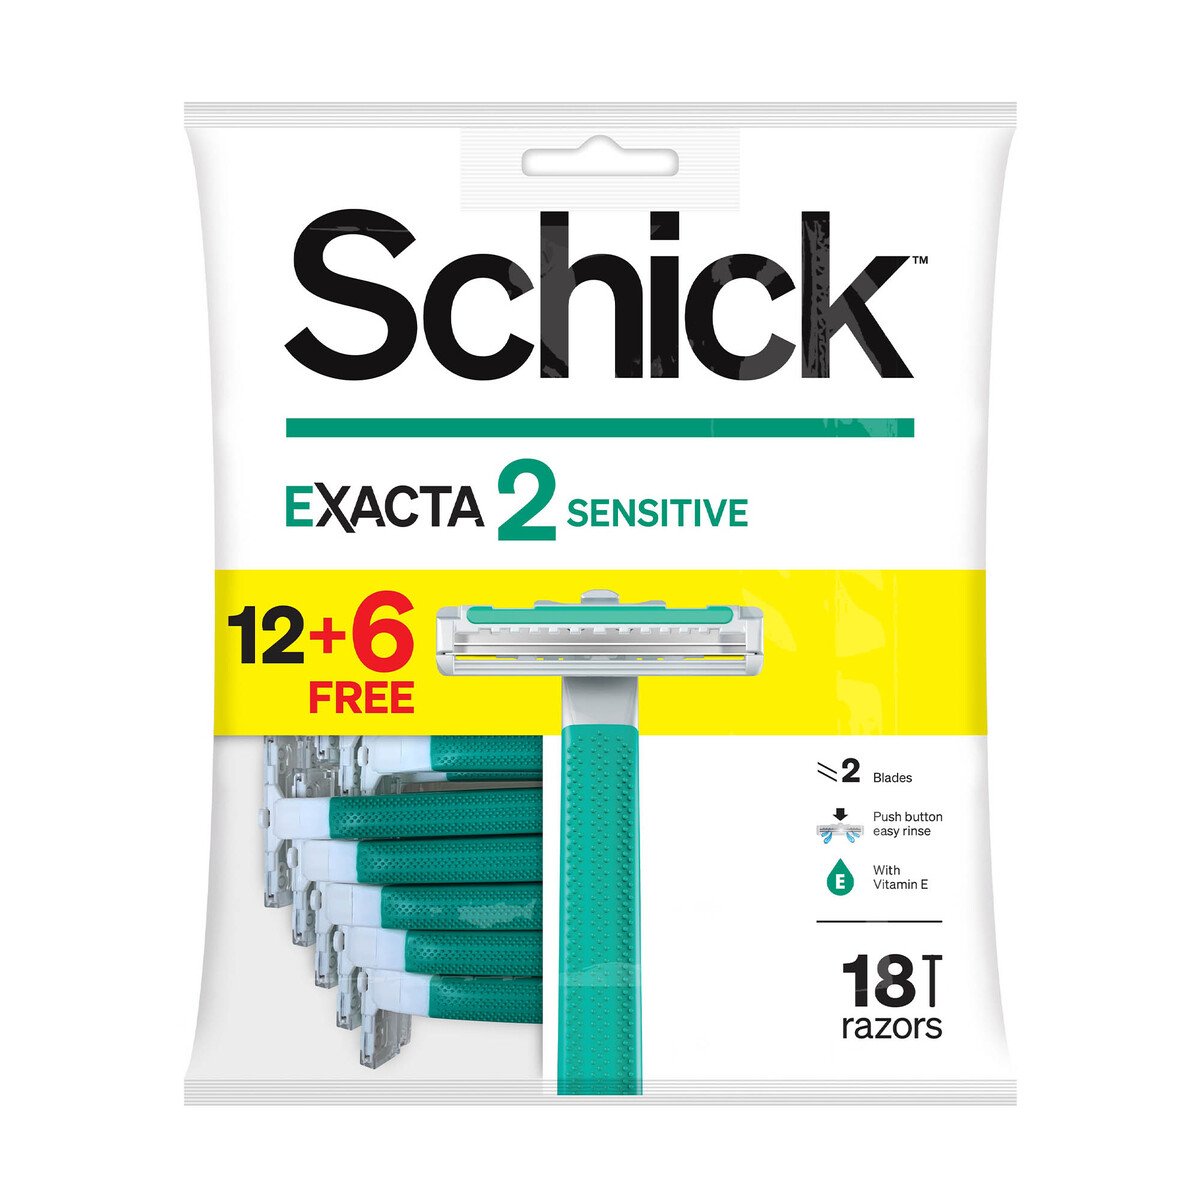 Schick Exacta 2 Sensitive Disposable Razor 12+6